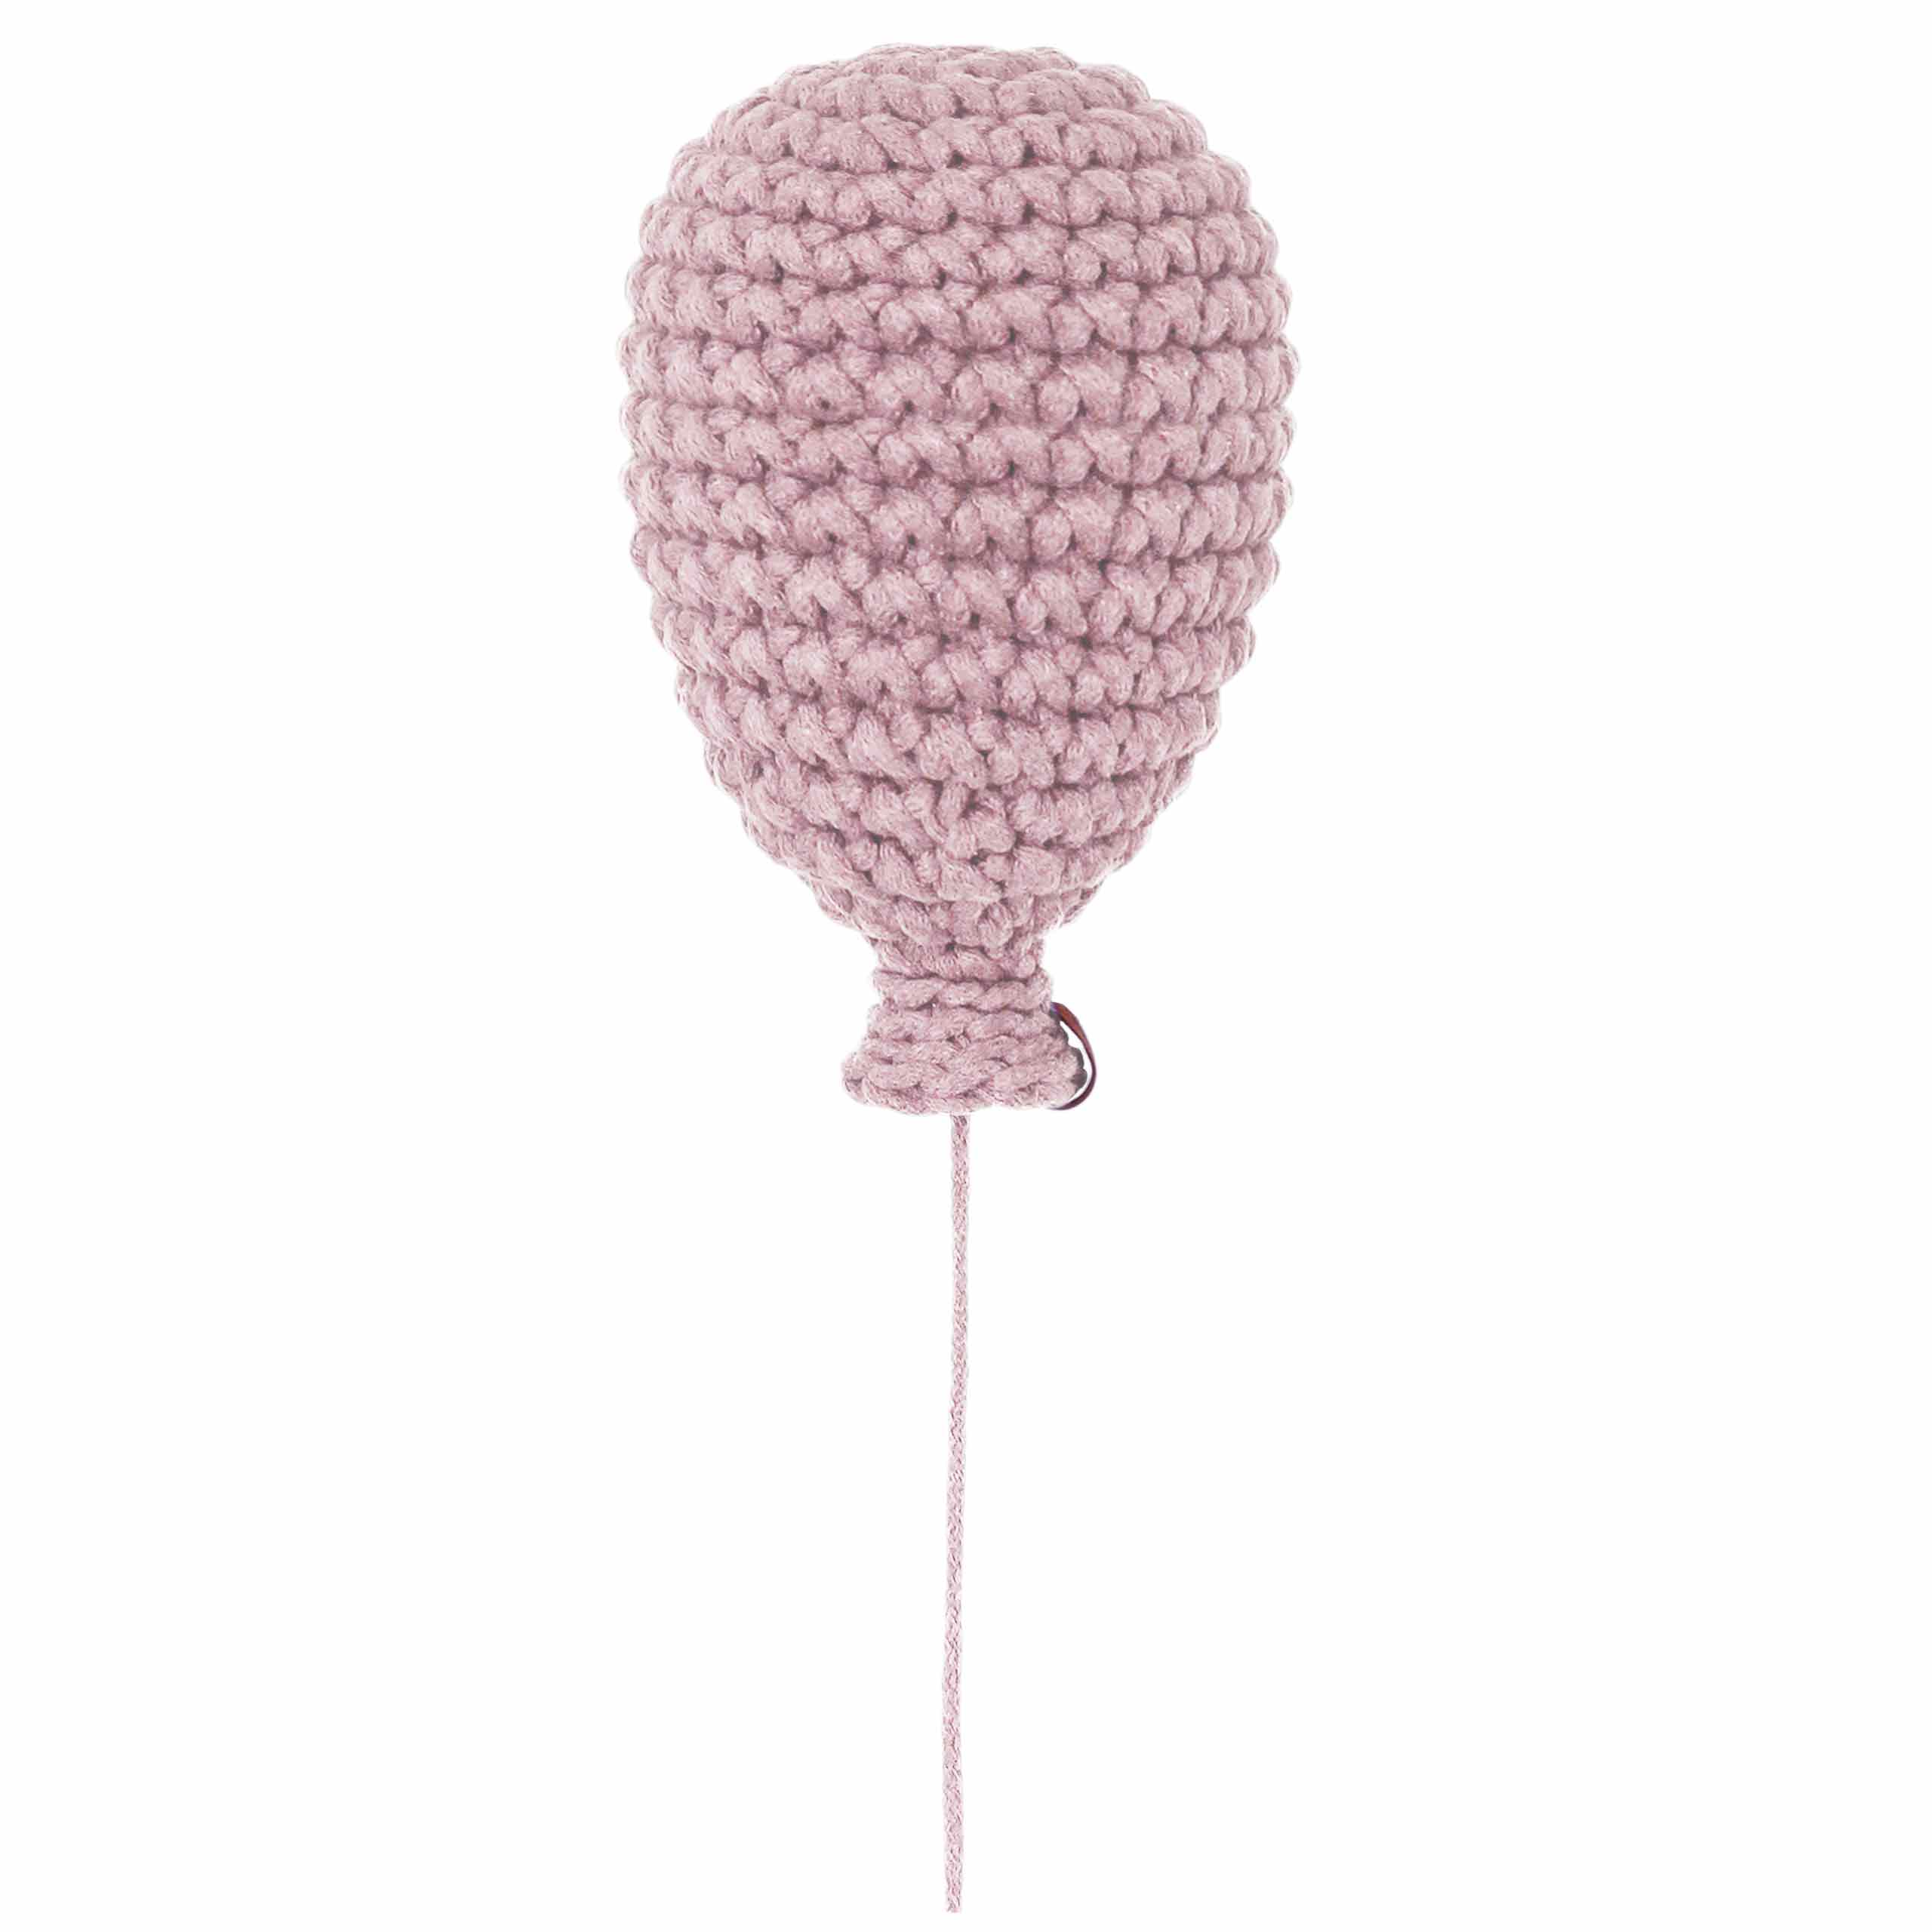 Crochet balloon | POWDER PINK